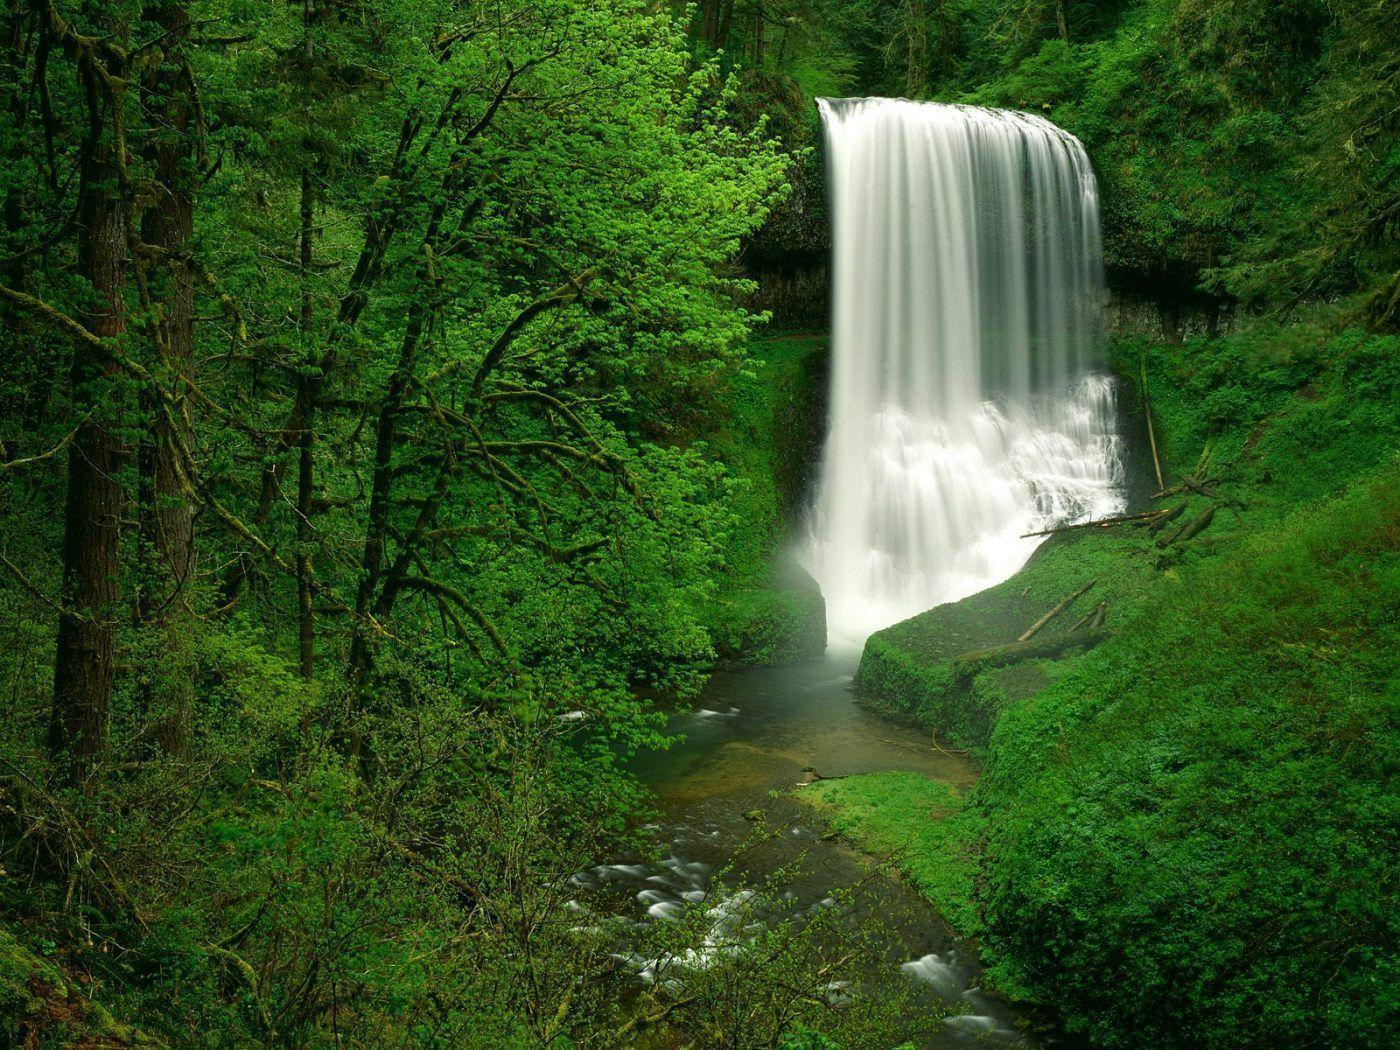 Waterfall in a Green Forest widescreen wallpaper. Wide